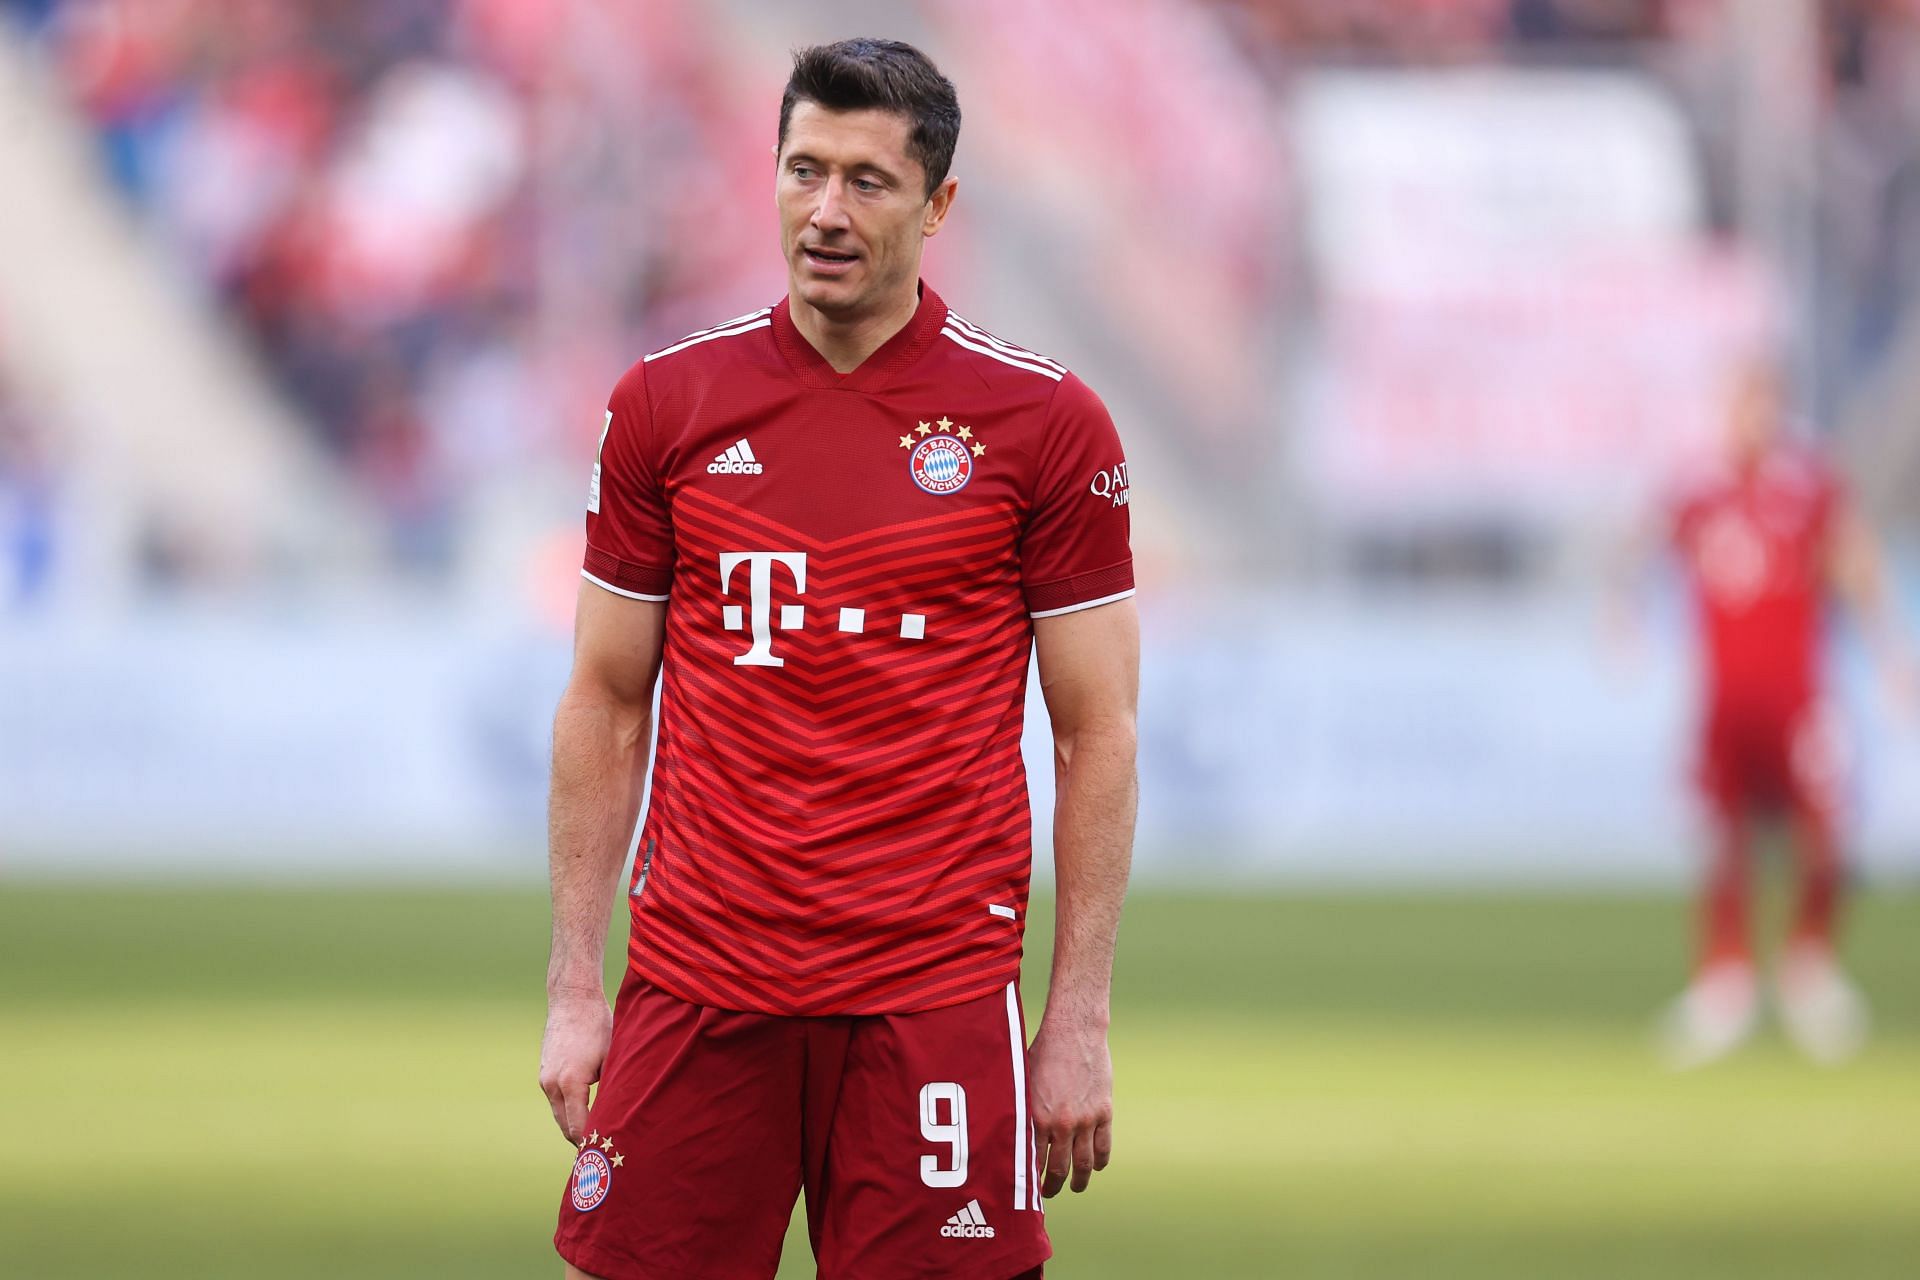 Bayern Munich need to show more purpose towards renewing Lewandowski&#039;s contract